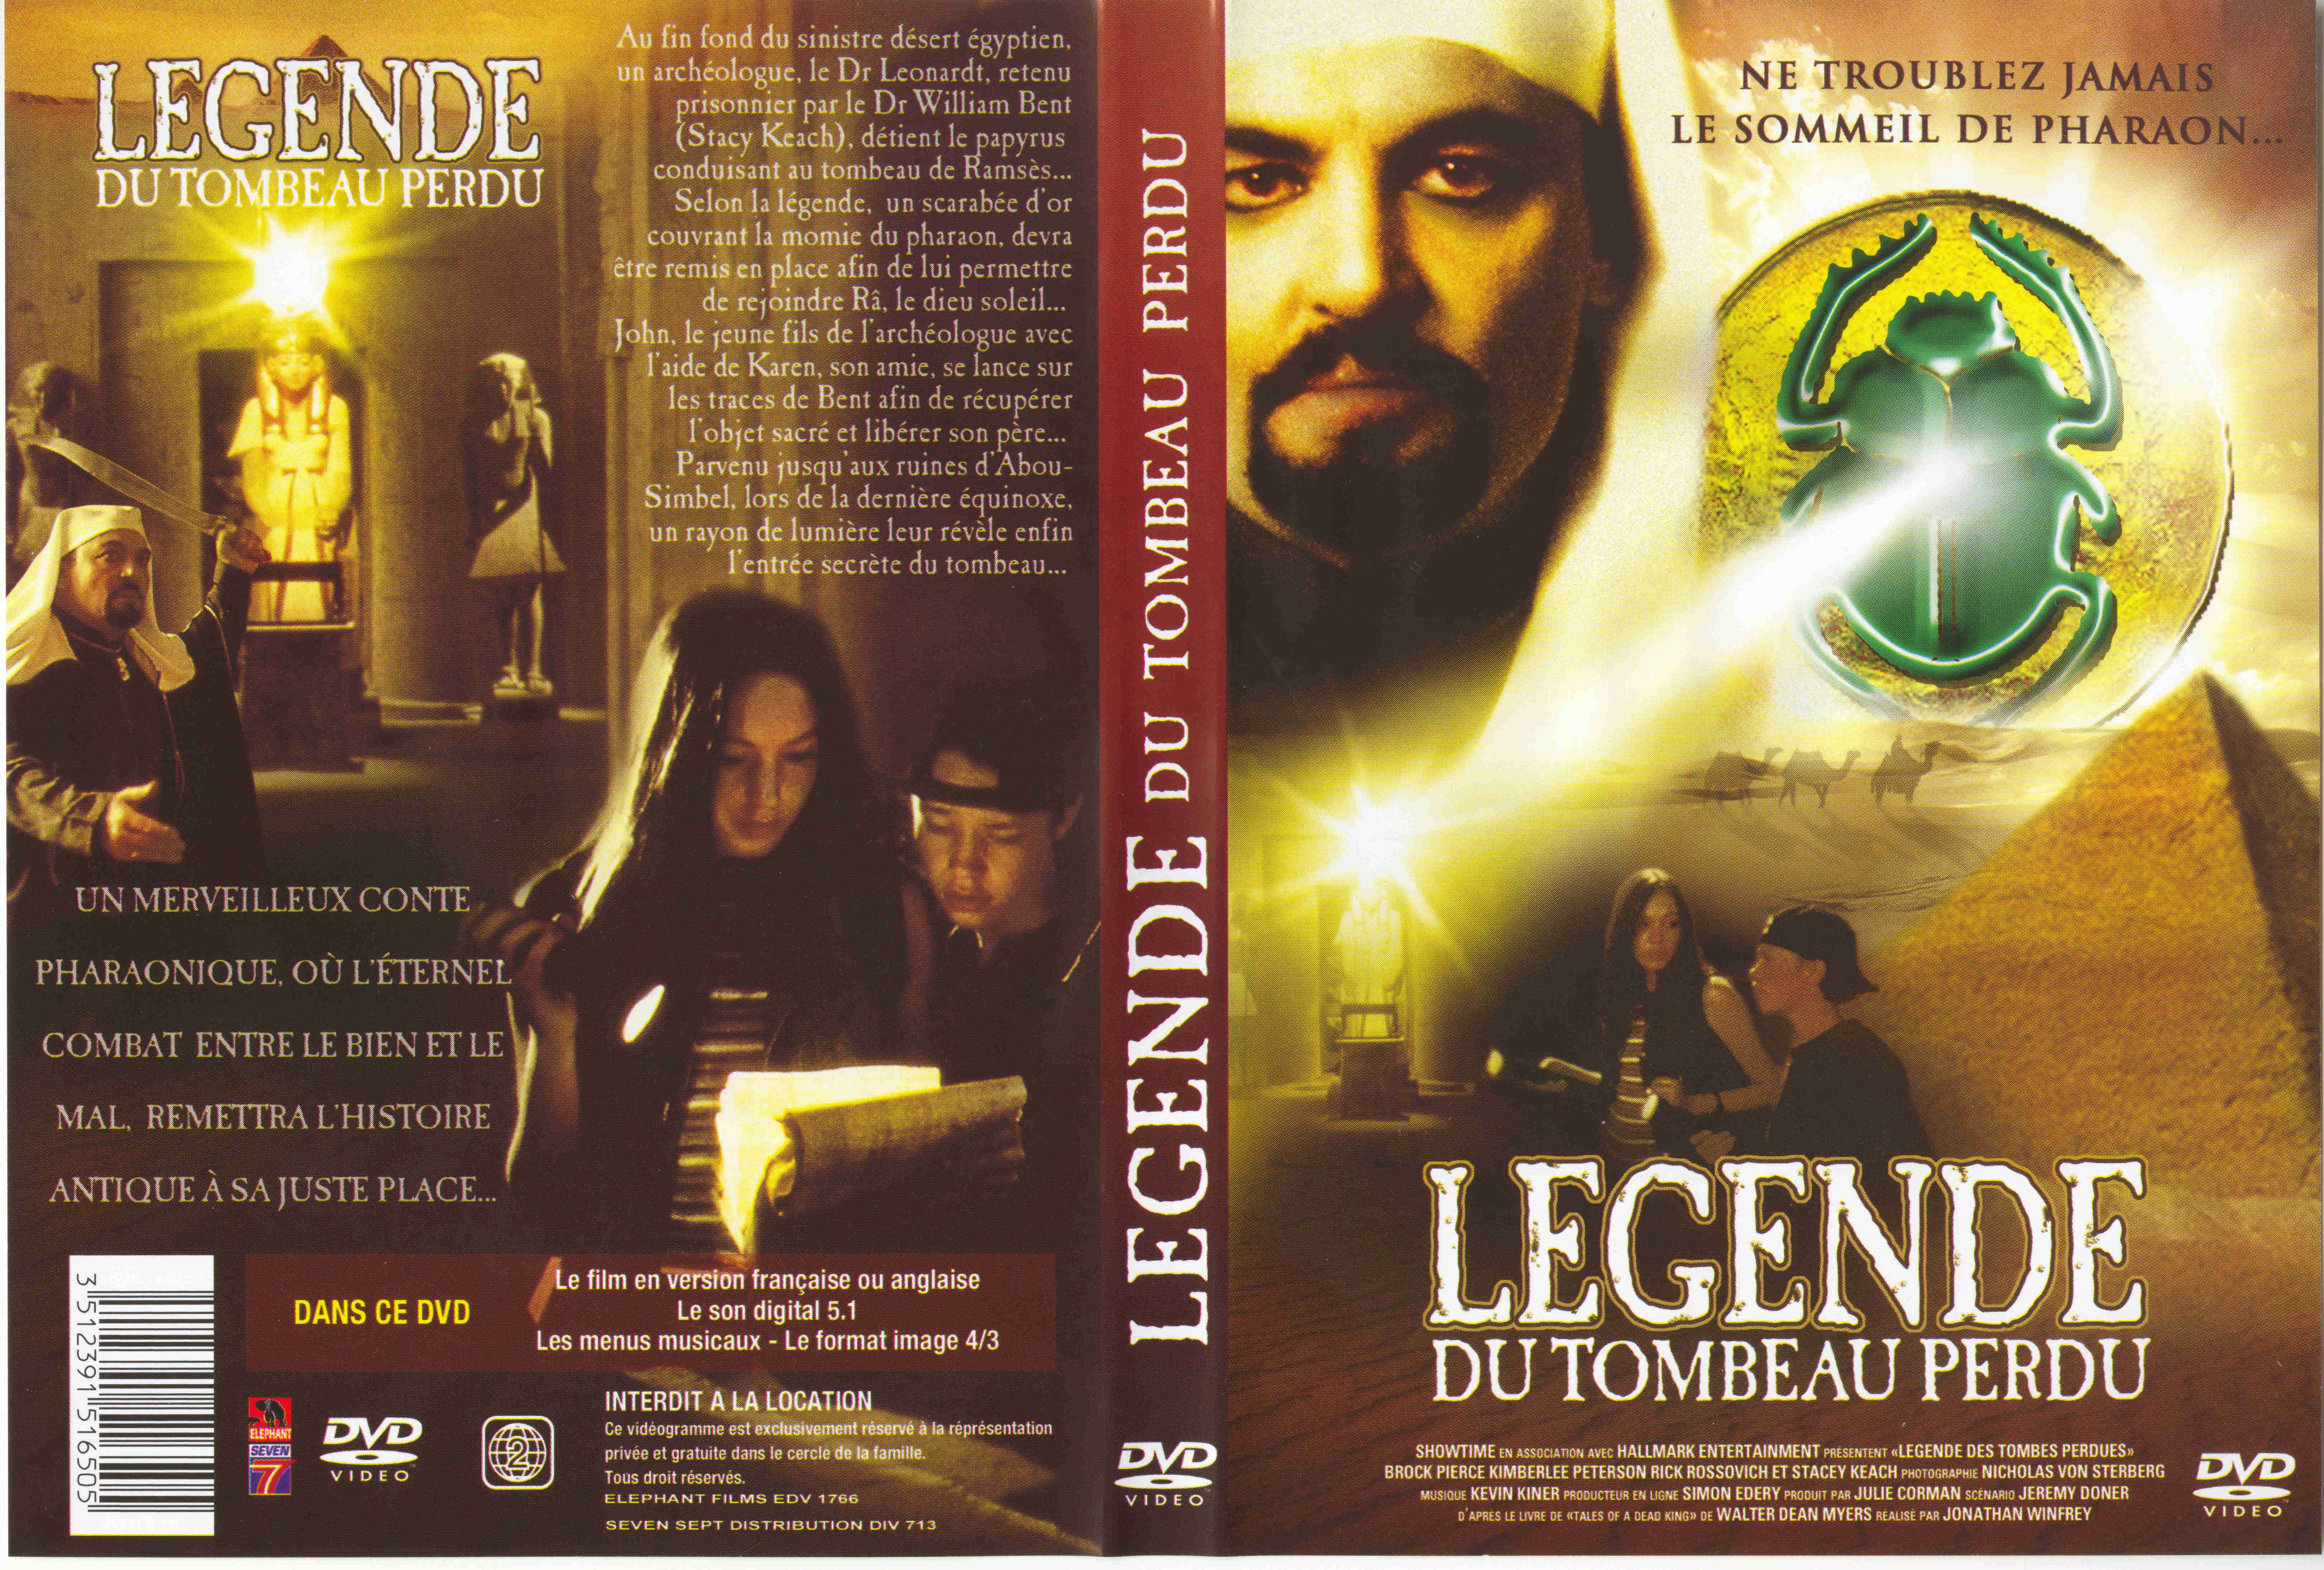 Jaquette DVD Legende du tombeau perdu v2